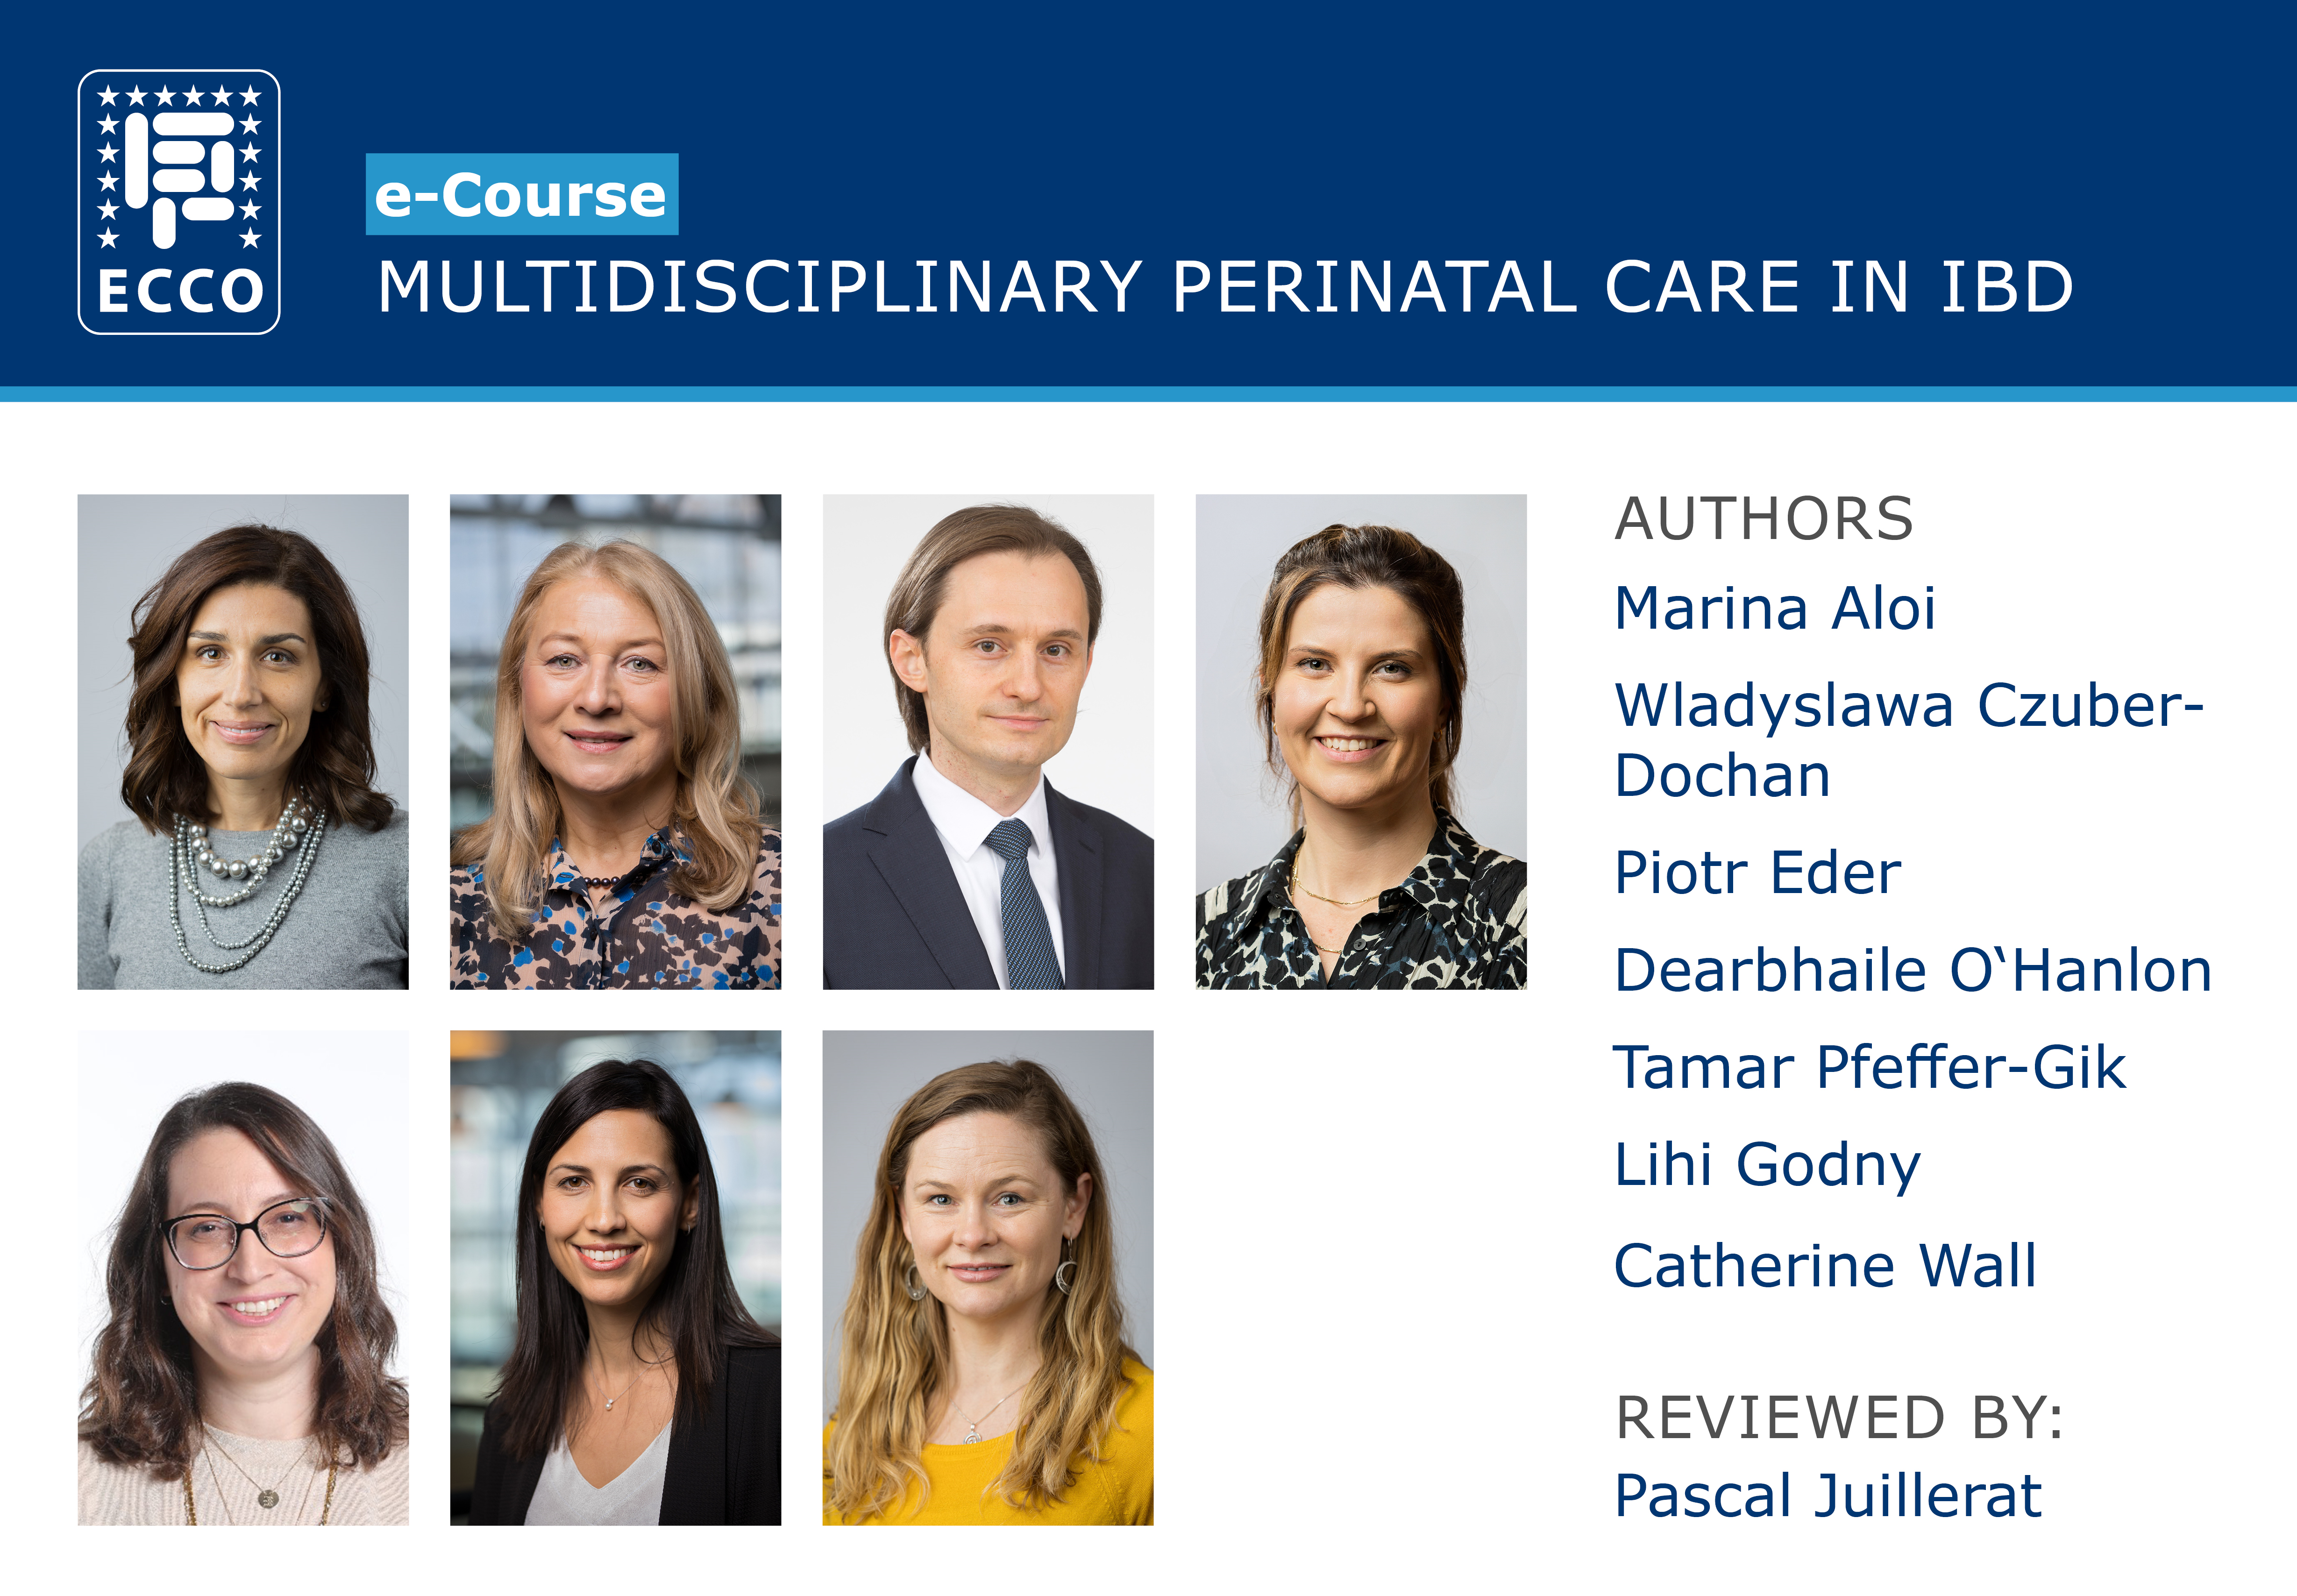 Multidisciplinary perinatal care in IBD